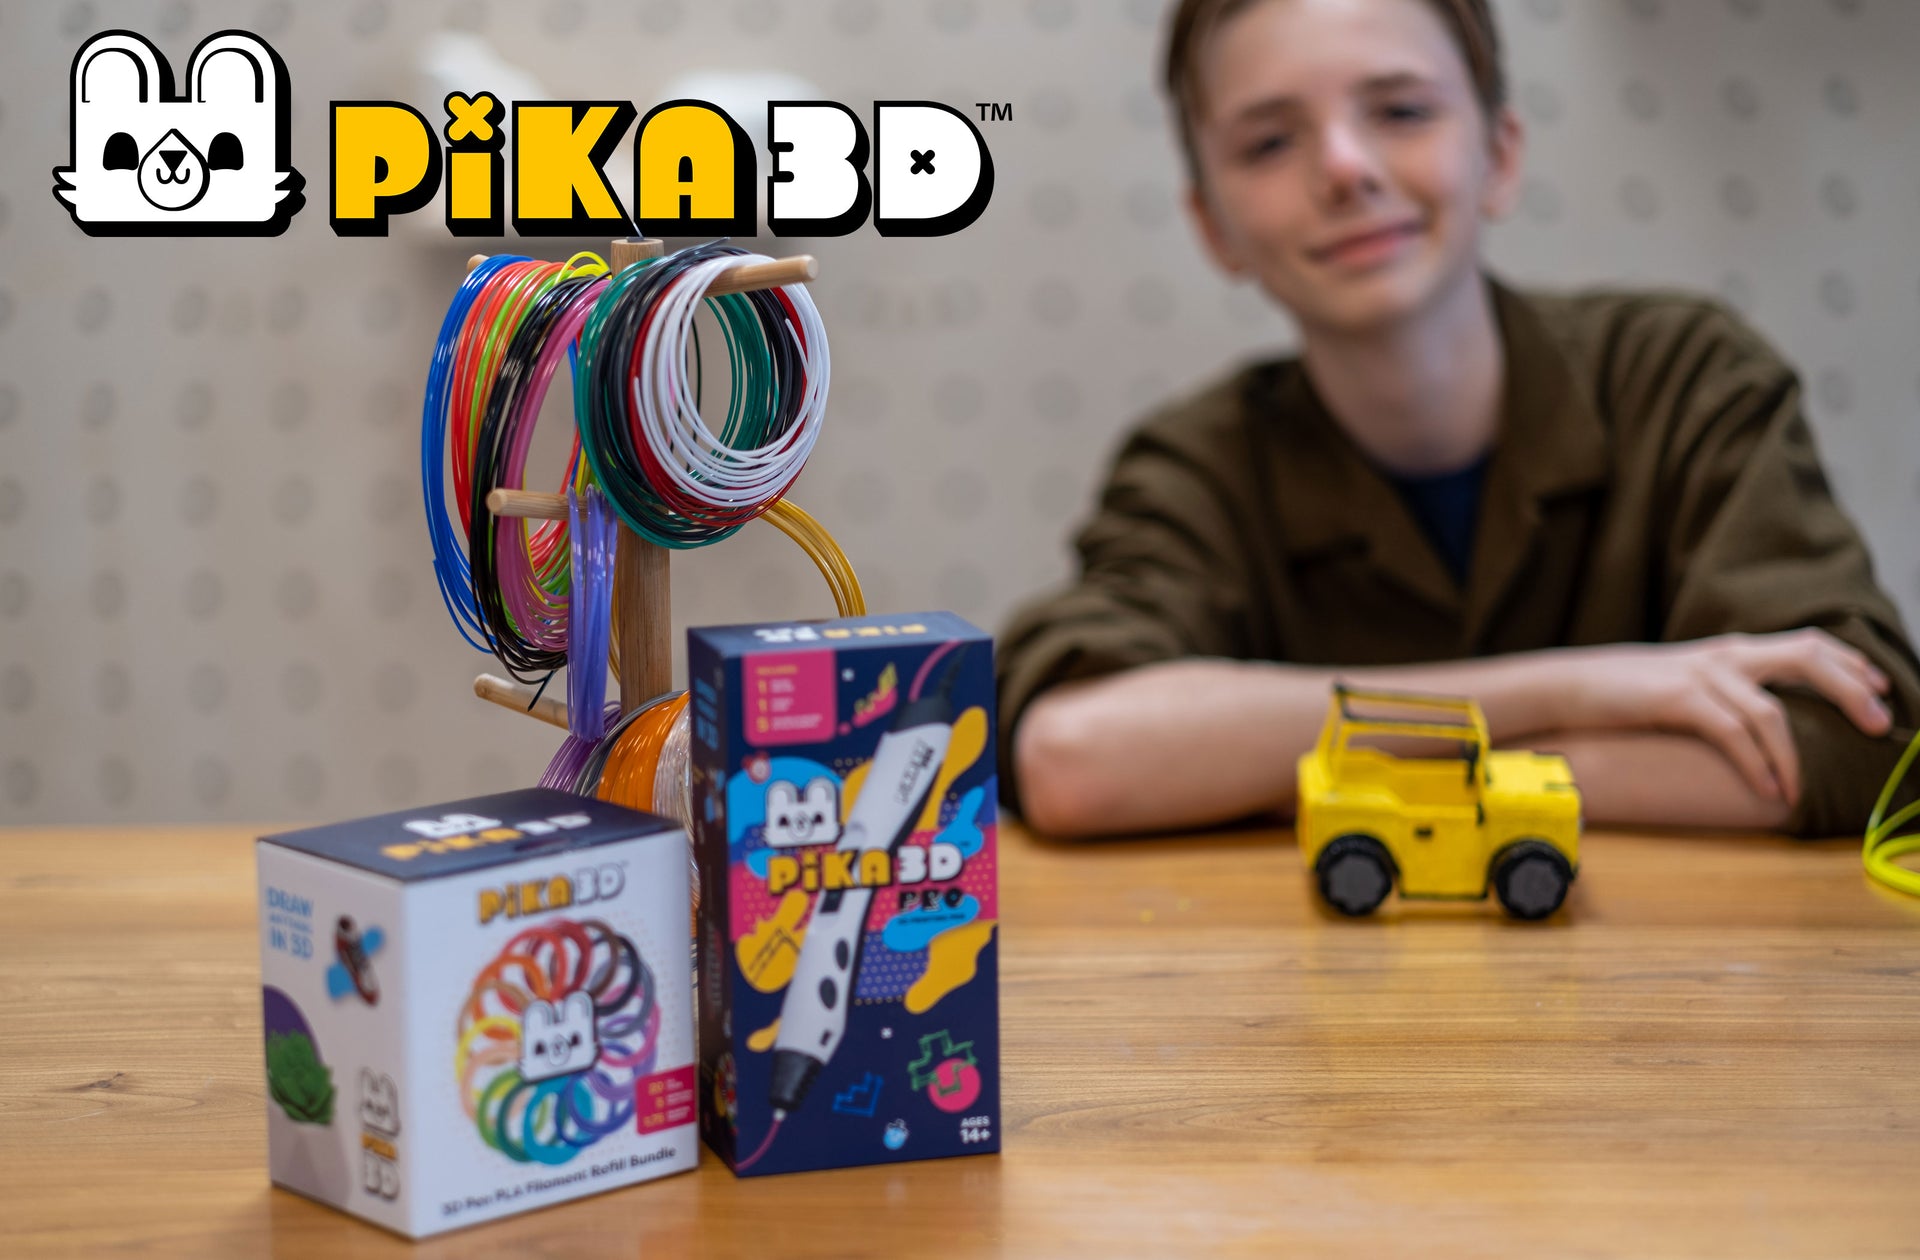 Load video: Pika3D